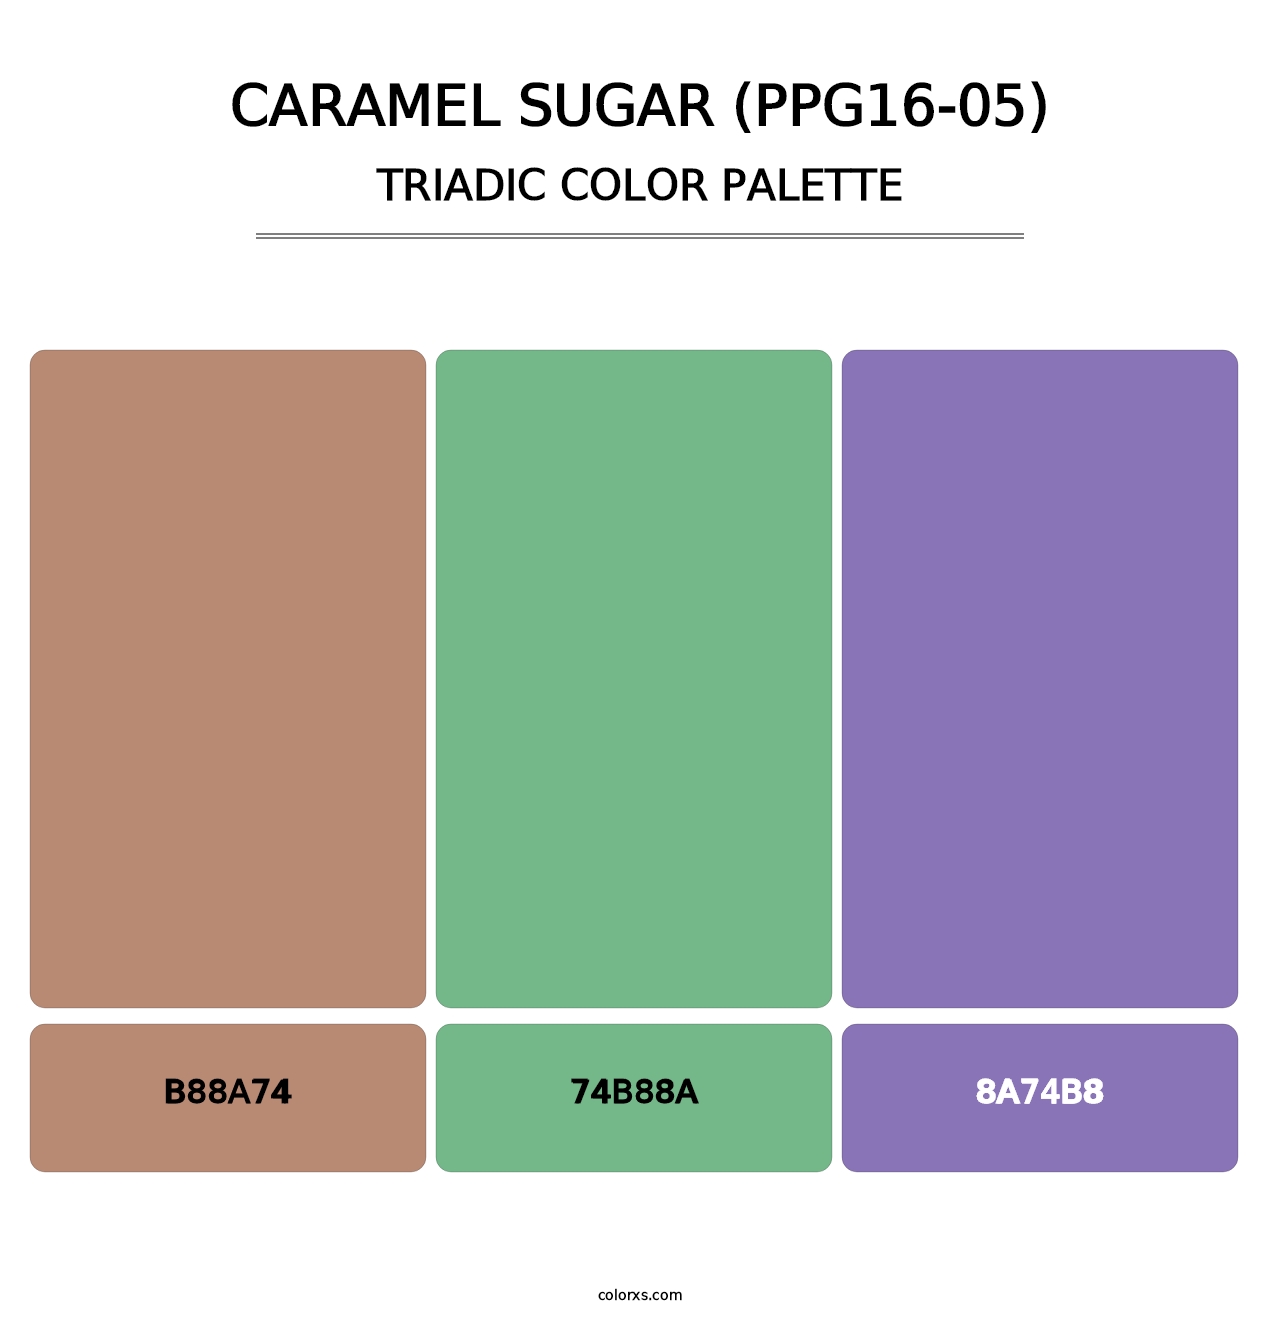 Caramel Sugar (PPG16-05) - Triadic Color Palette